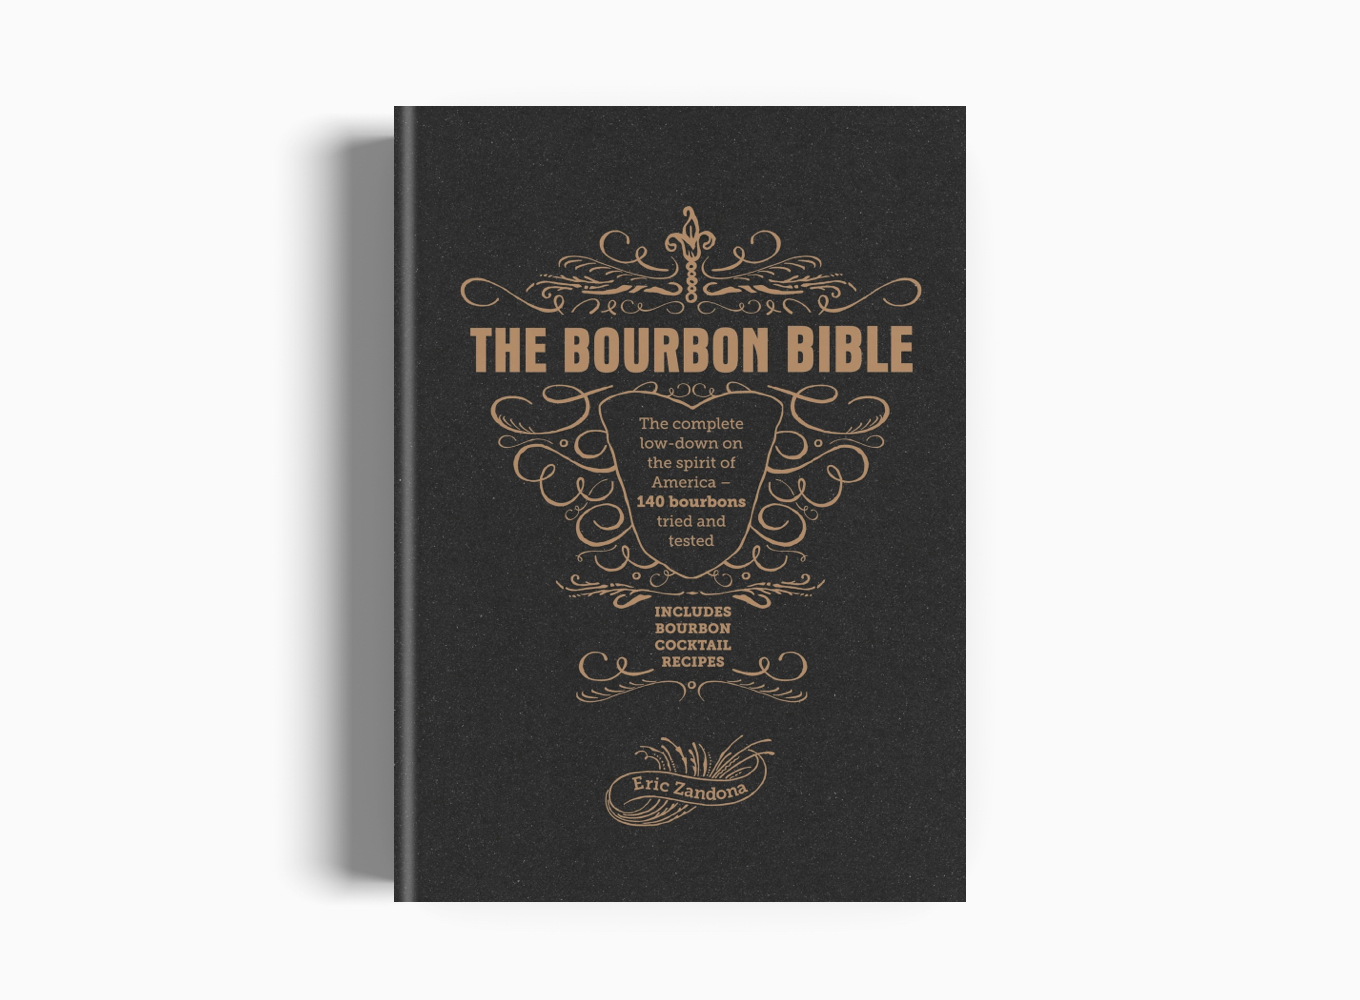 THE BOURBON BIBLE